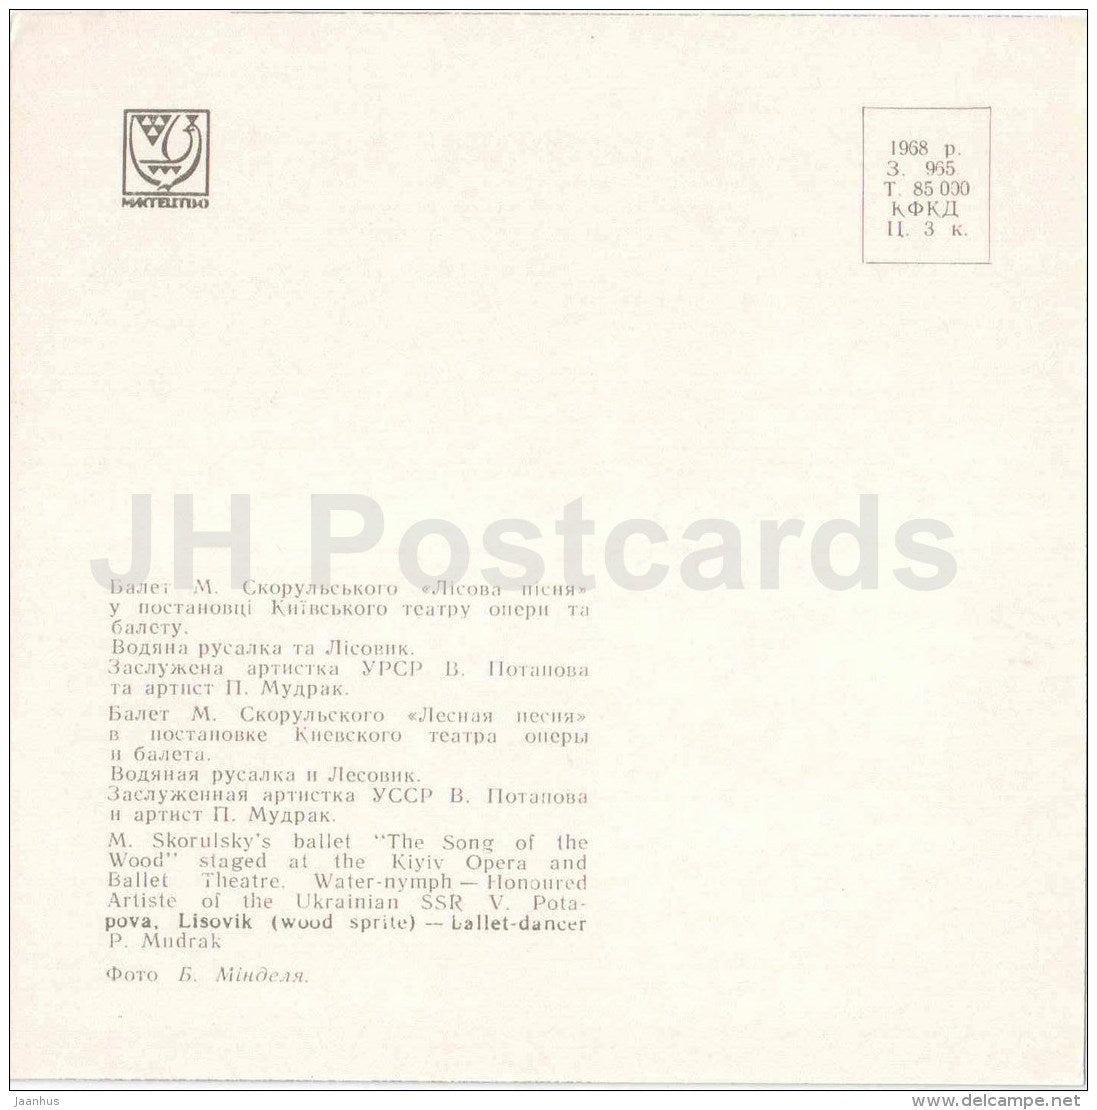 Water-Nymph , V. Potapova - P. Mudrak - The Song of the Wood by Skorulsky - Ballet - 1968 - Ukraine USSR - unused - JH Postcards